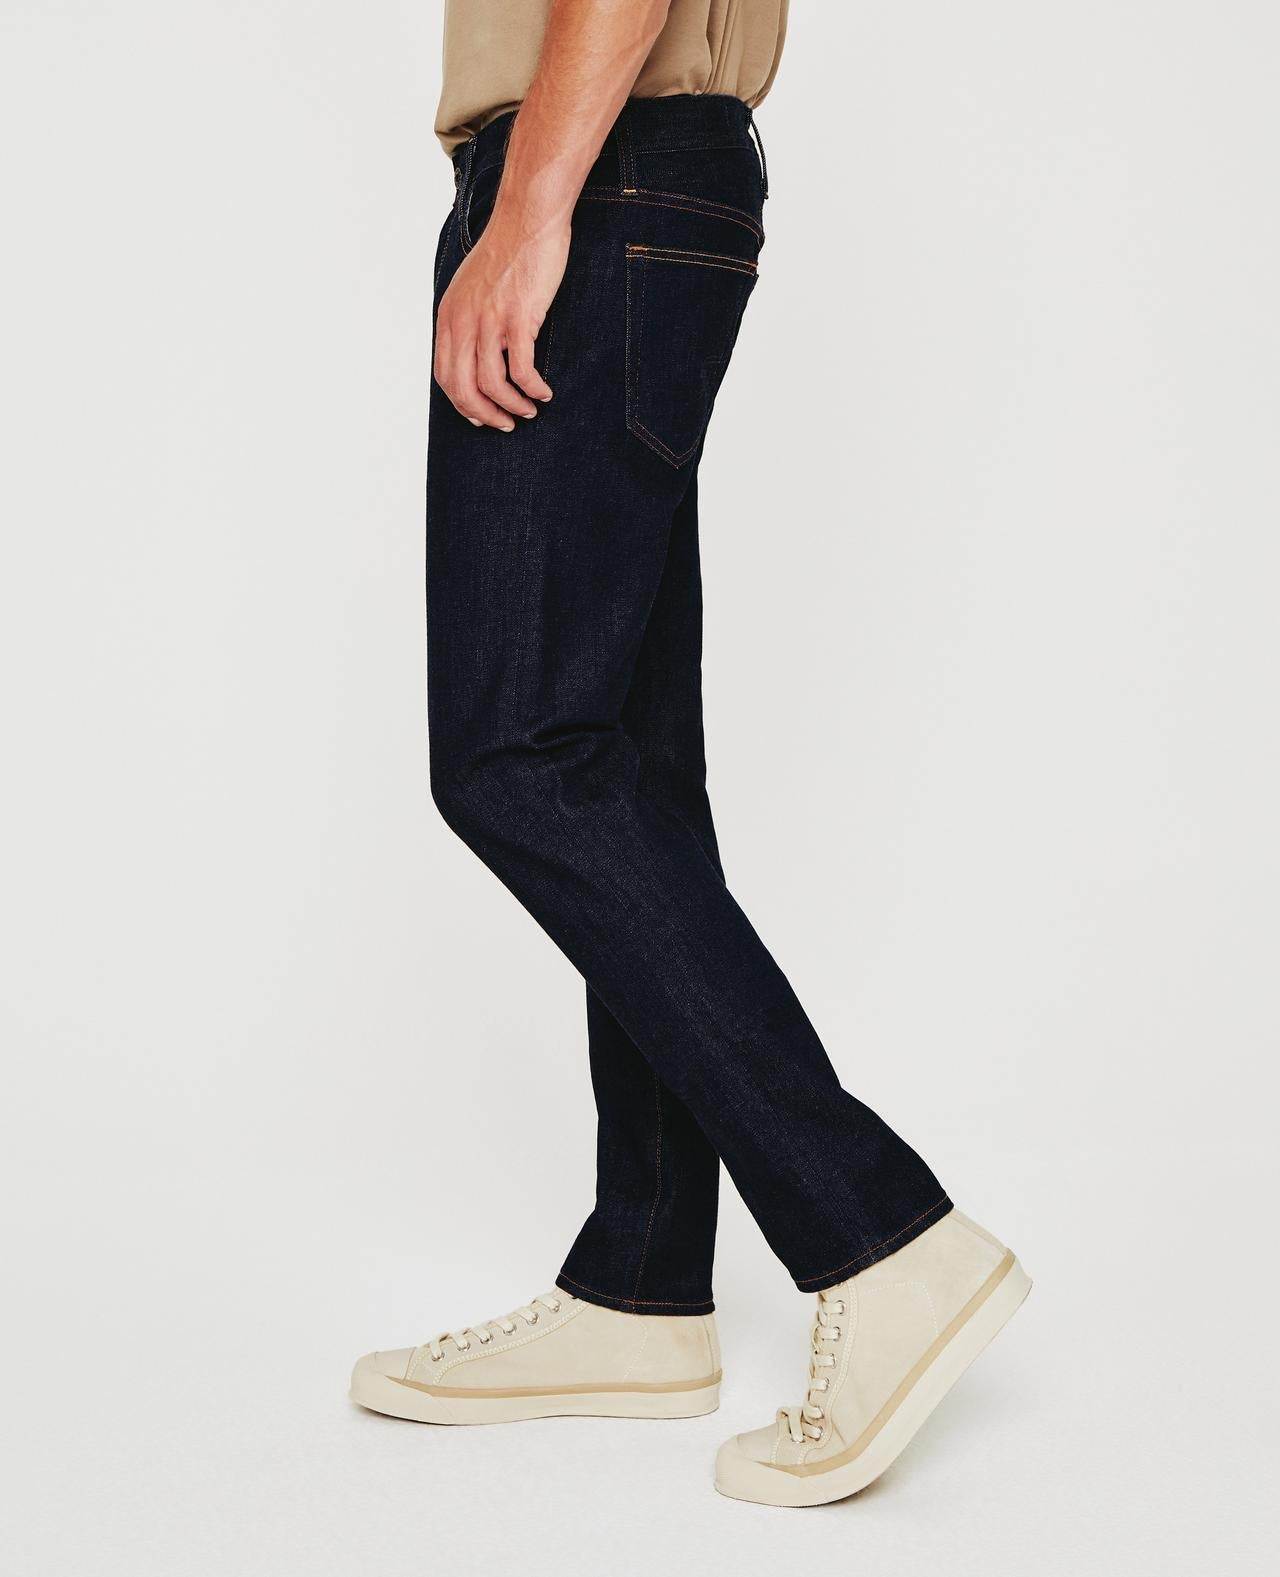 Dylan Slim Skinny Jean - AG Jeans - Danali - 1139TSY-CUCL-29